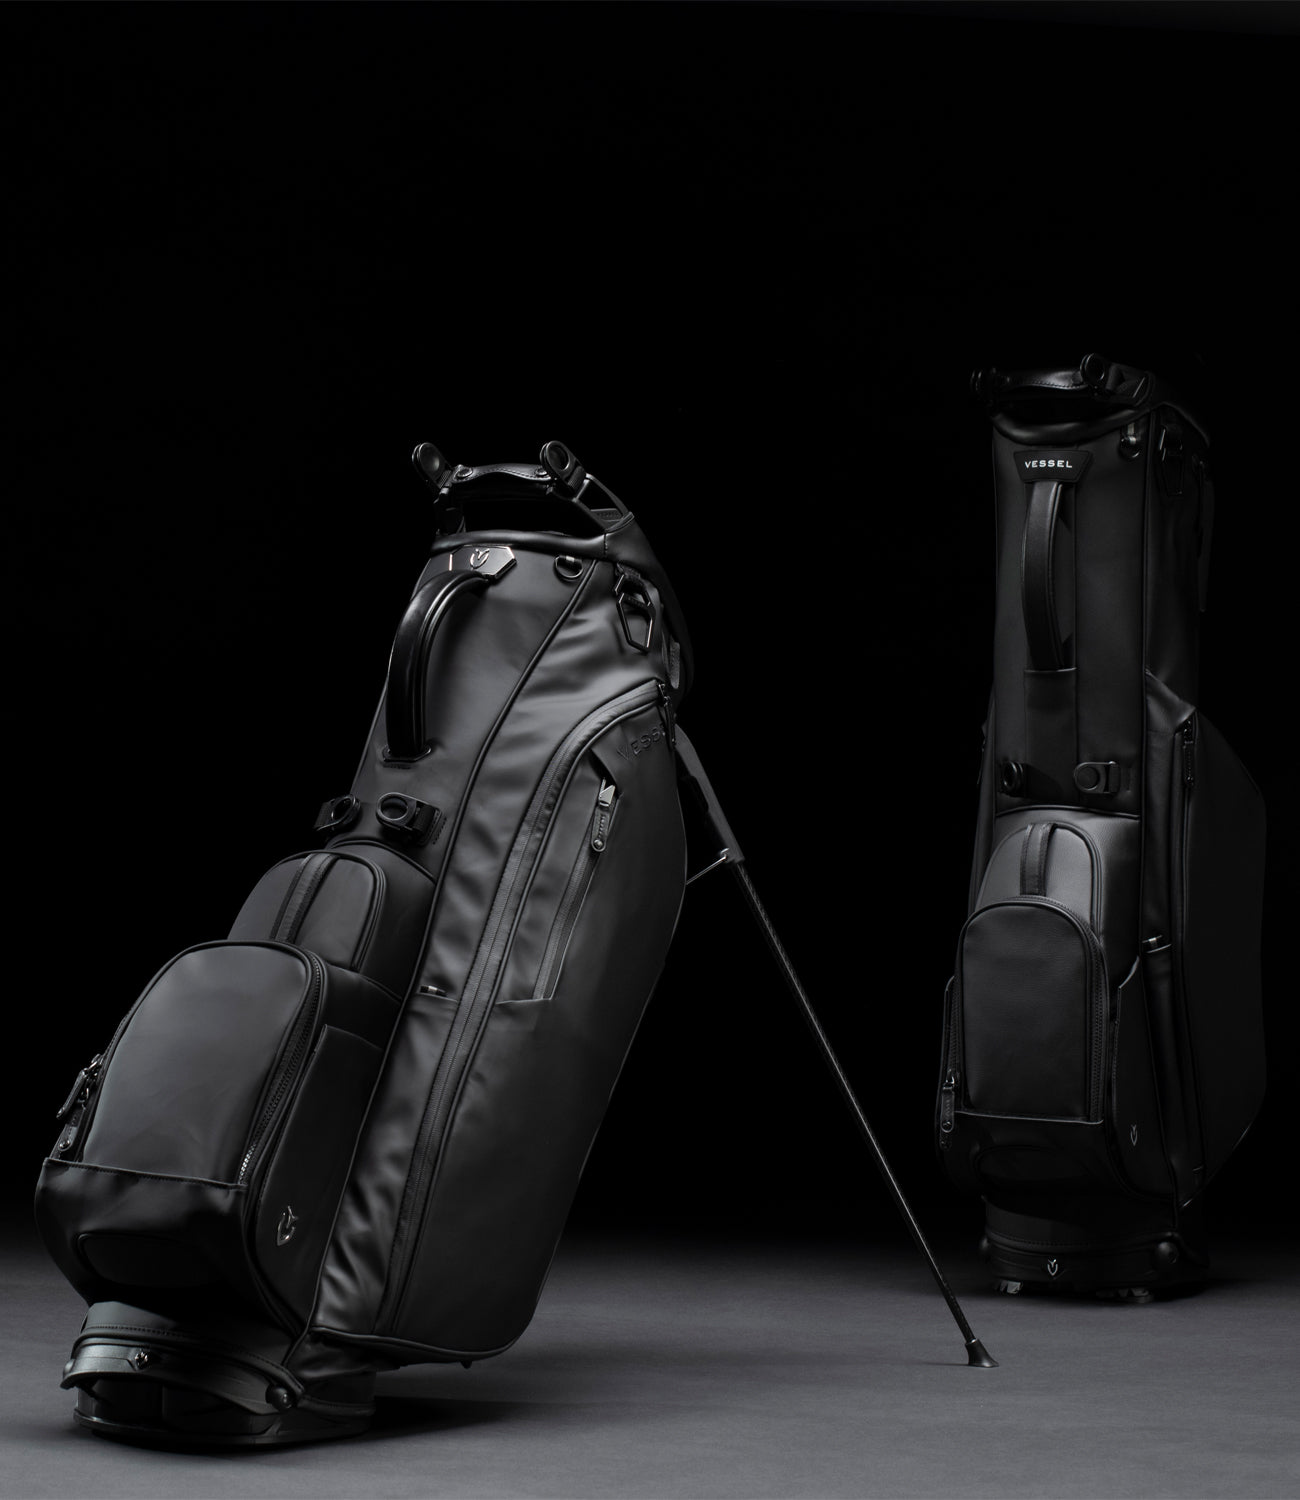 Buy Powerbilt Santa Rosa BlackOrange Stand Golf Bag BlackOrange Online  at Low Prices in India  Amazonin